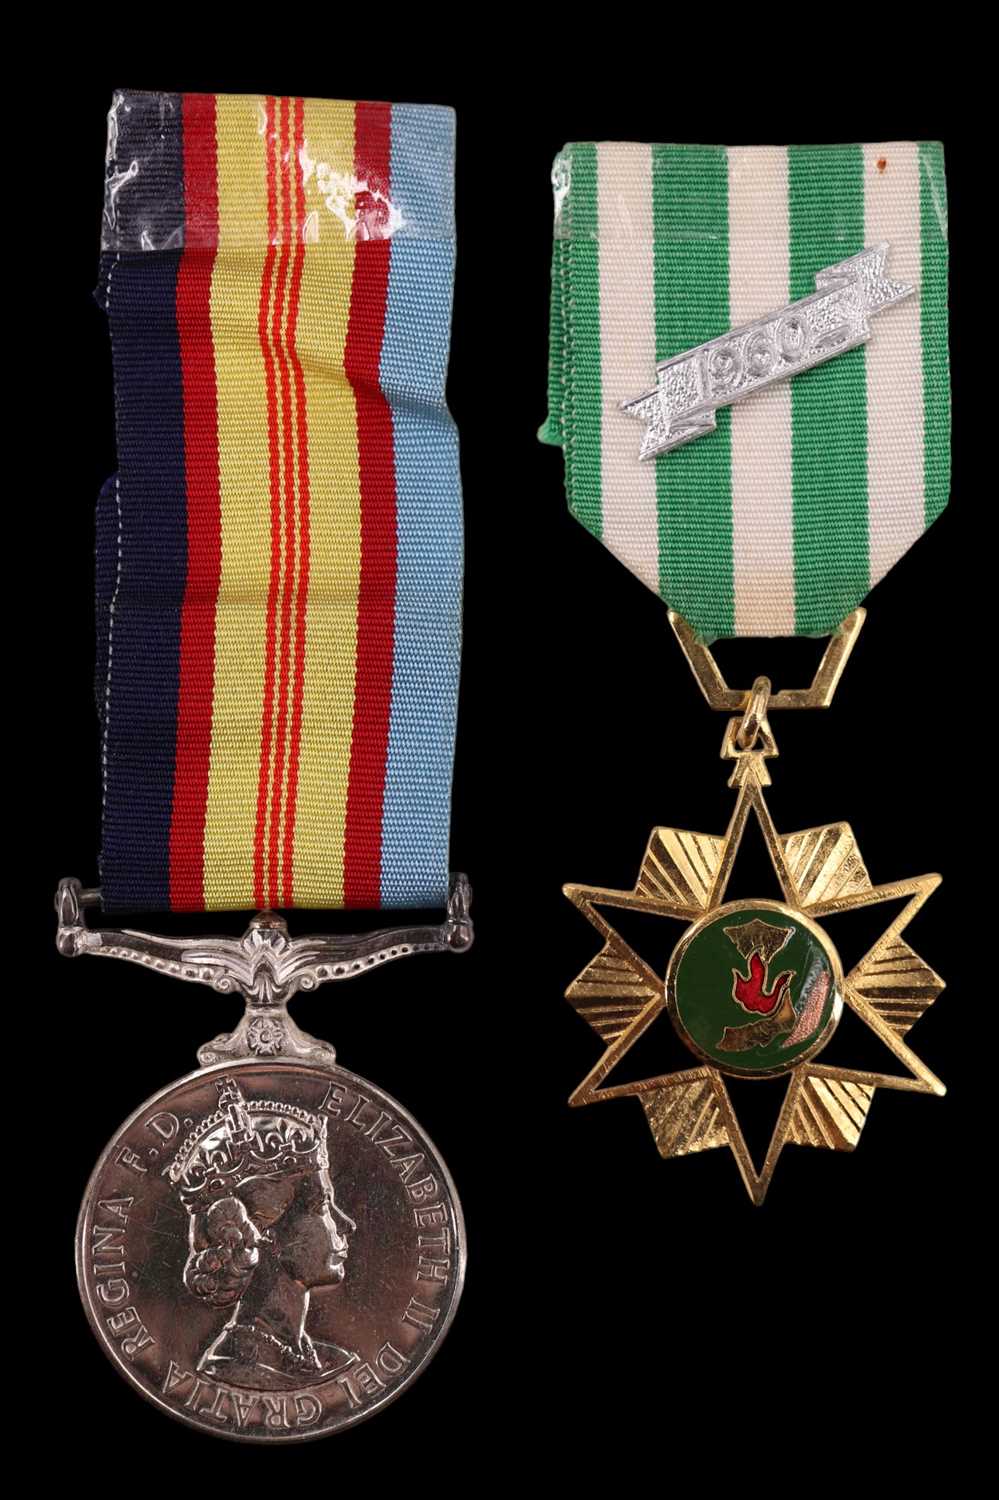 Vietnam War and South Vietnamese Campaign Medals to 44170 L C Nicholls